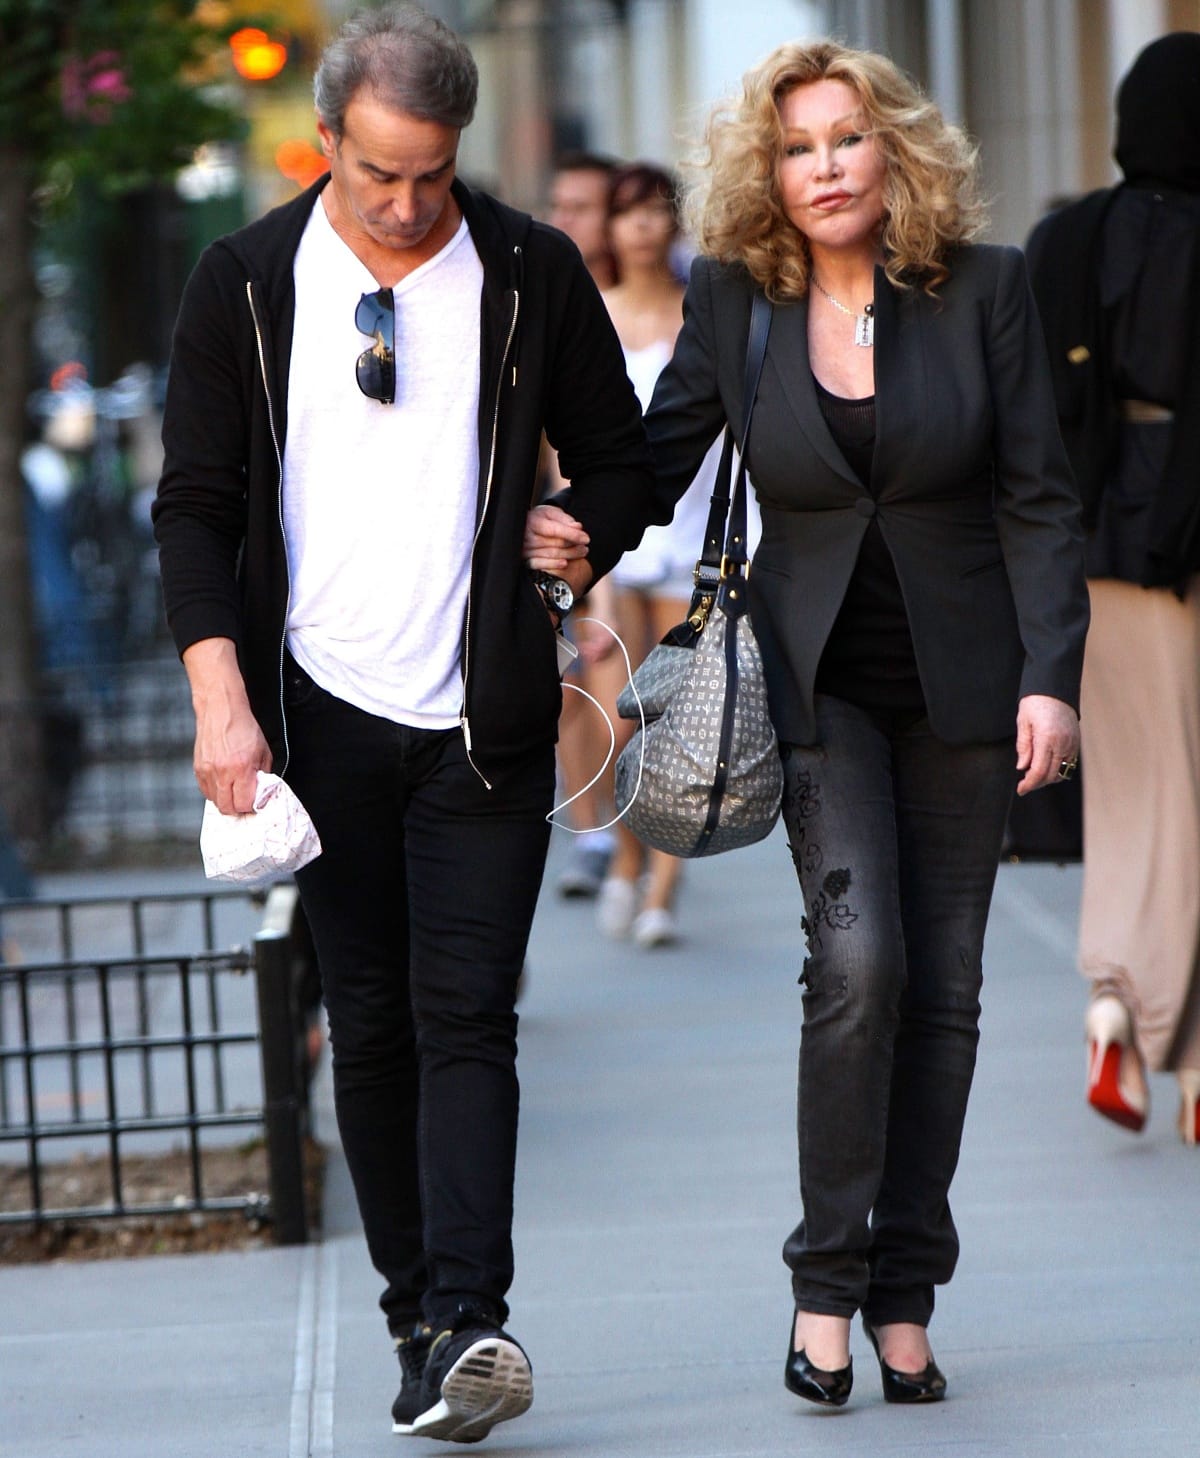 Lloyd Klein and Jocelyn Wildenstein taking a walk in Tribeca